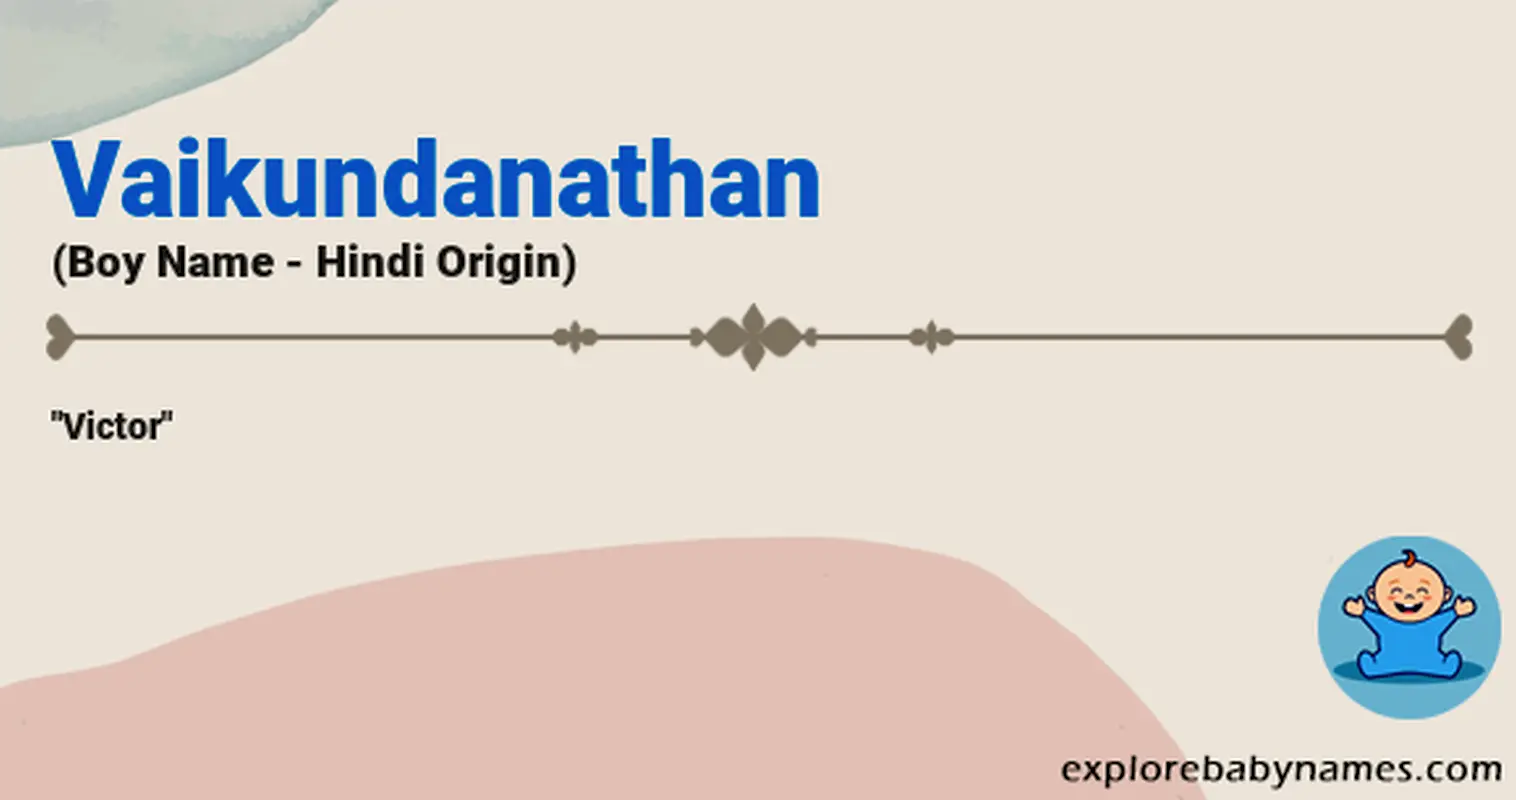 Meaning of Vaikundanathan